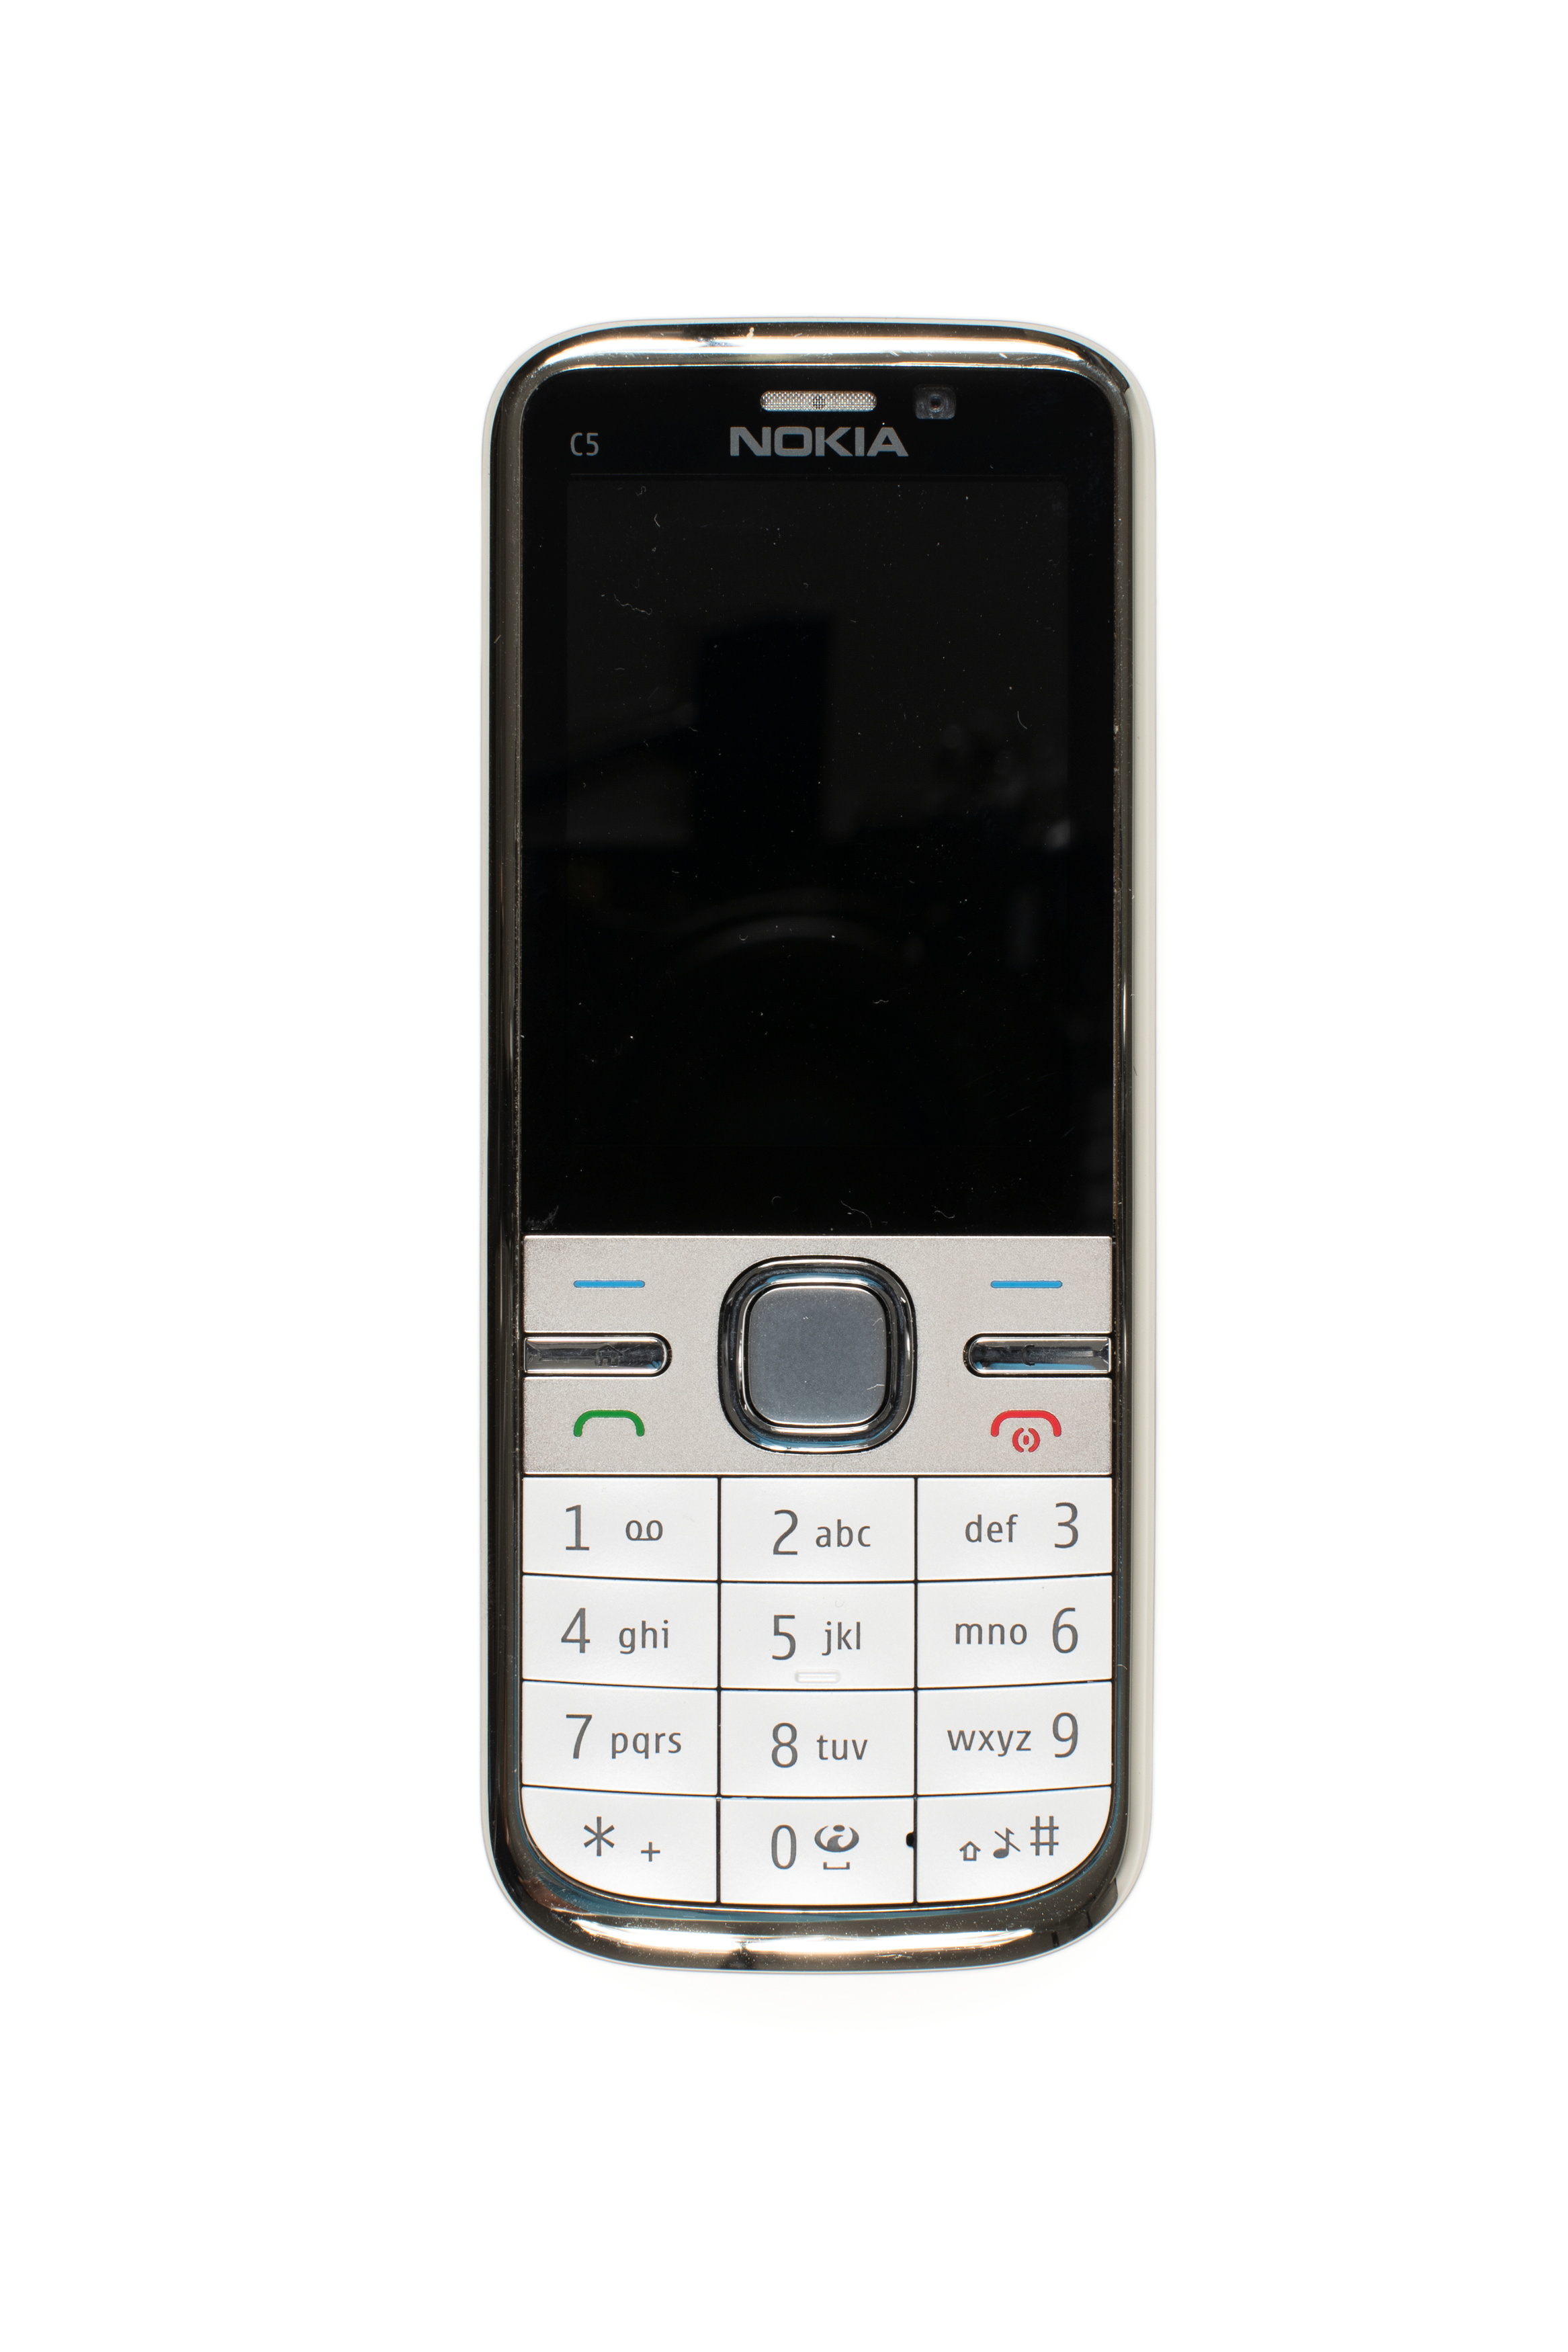 'C5-00' model Nokia mobile telephone